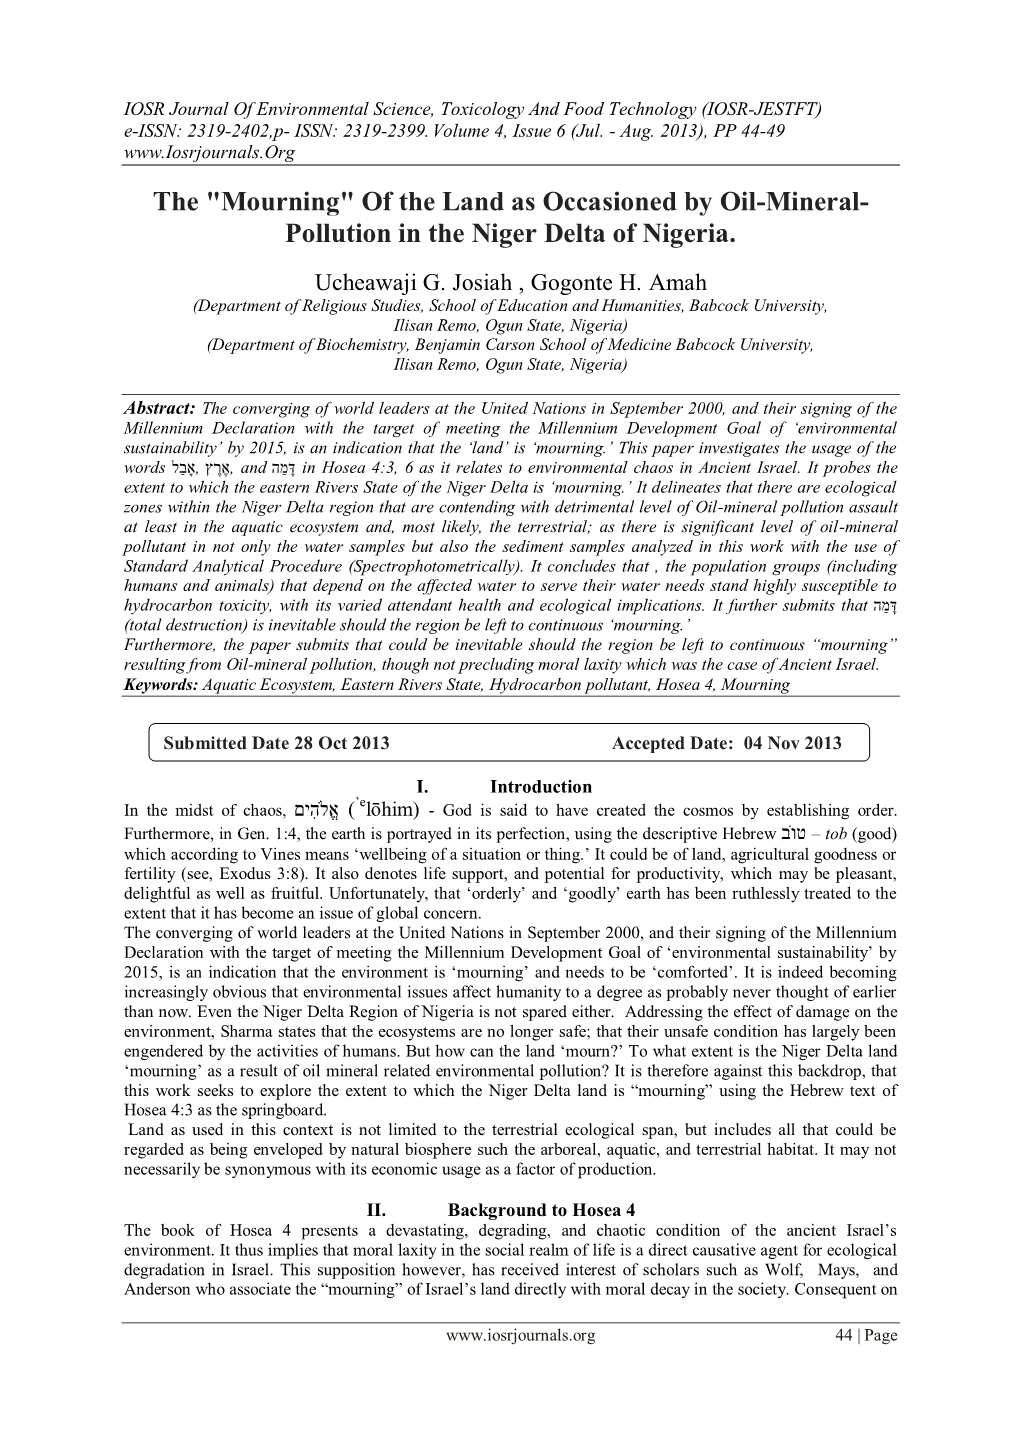 Vis-À-Vis Oil-Mineral- Pollution in the Niger Delta of Nigeria